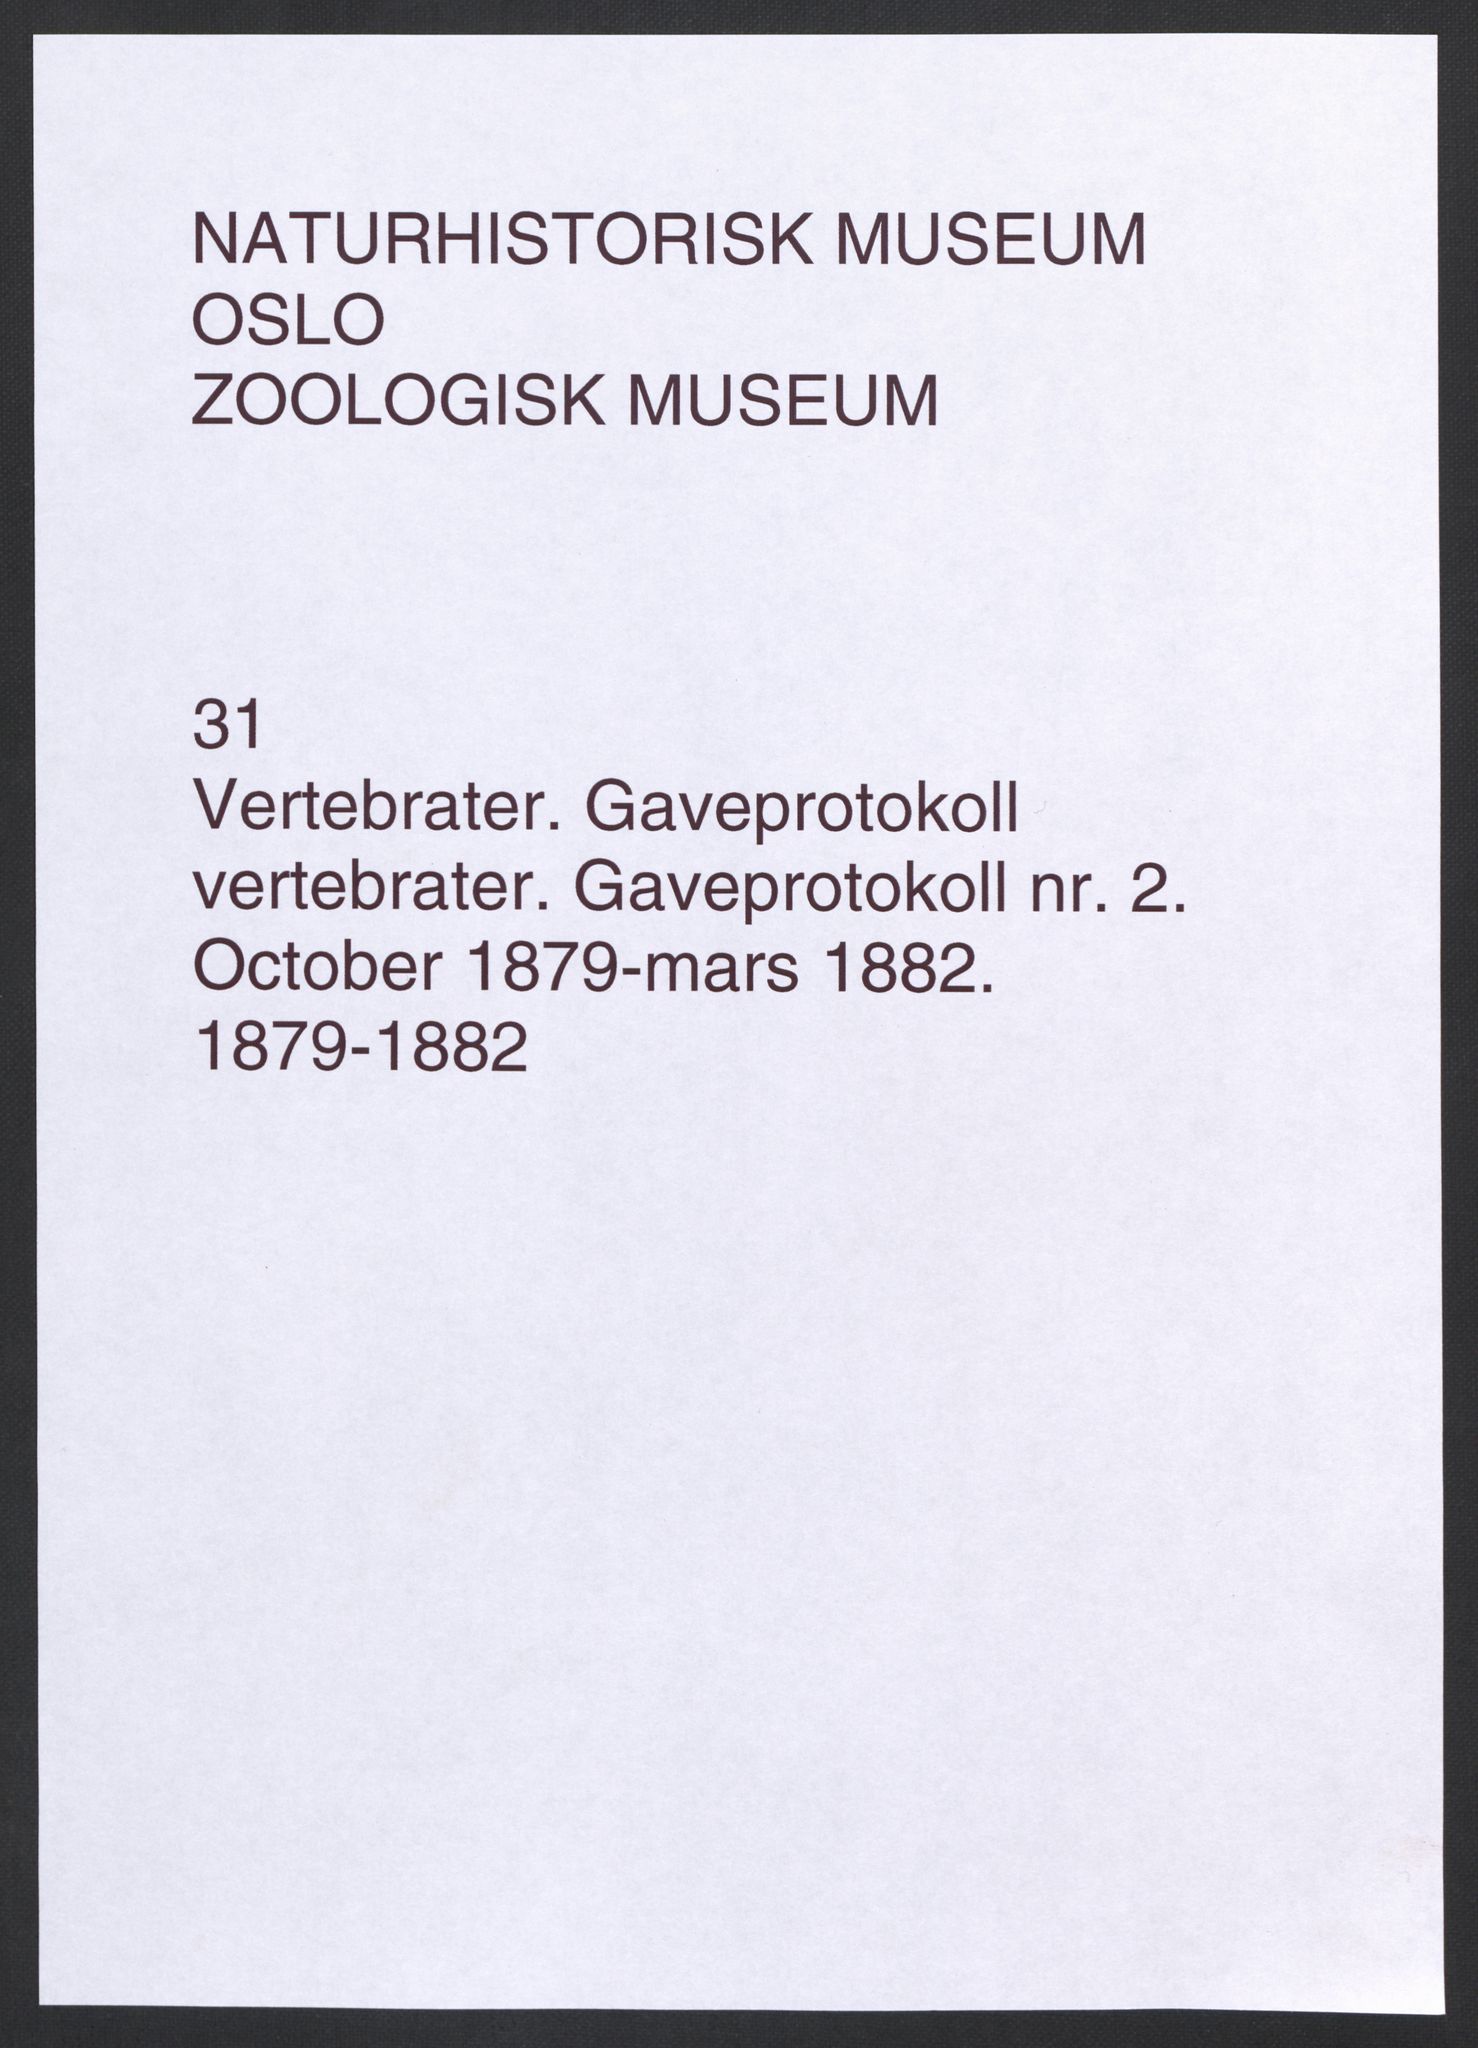 Naturhistorisk museum (Oslo), NHMO/-/5, 1879-1882